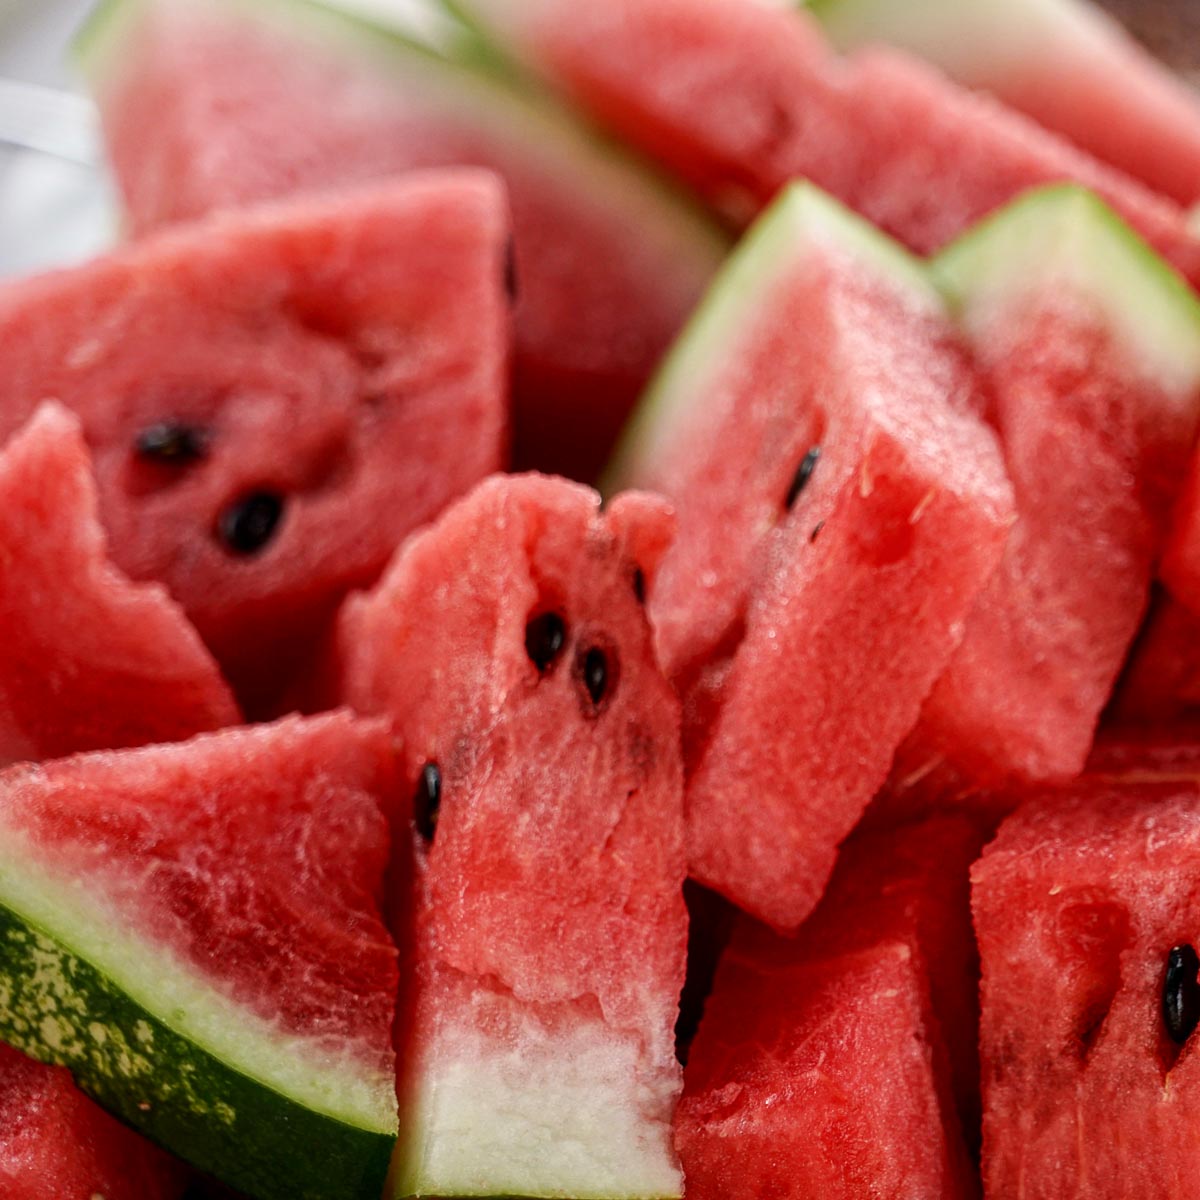 Watermelon Wedger, Fruit Tools